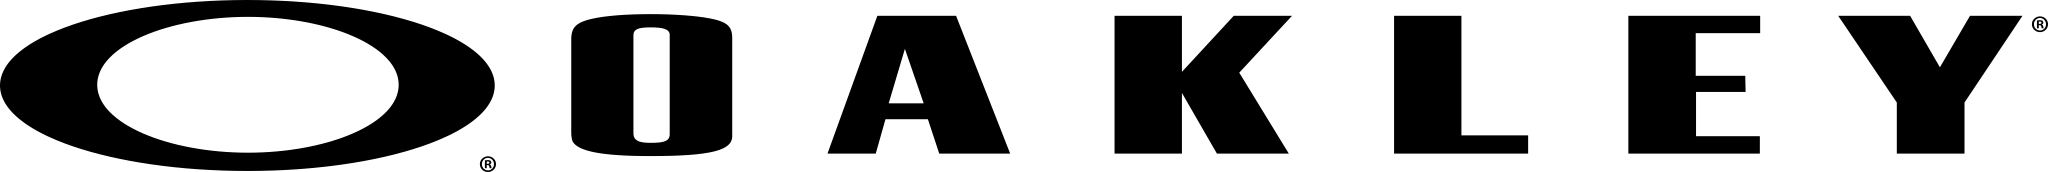 Logo de Oakley